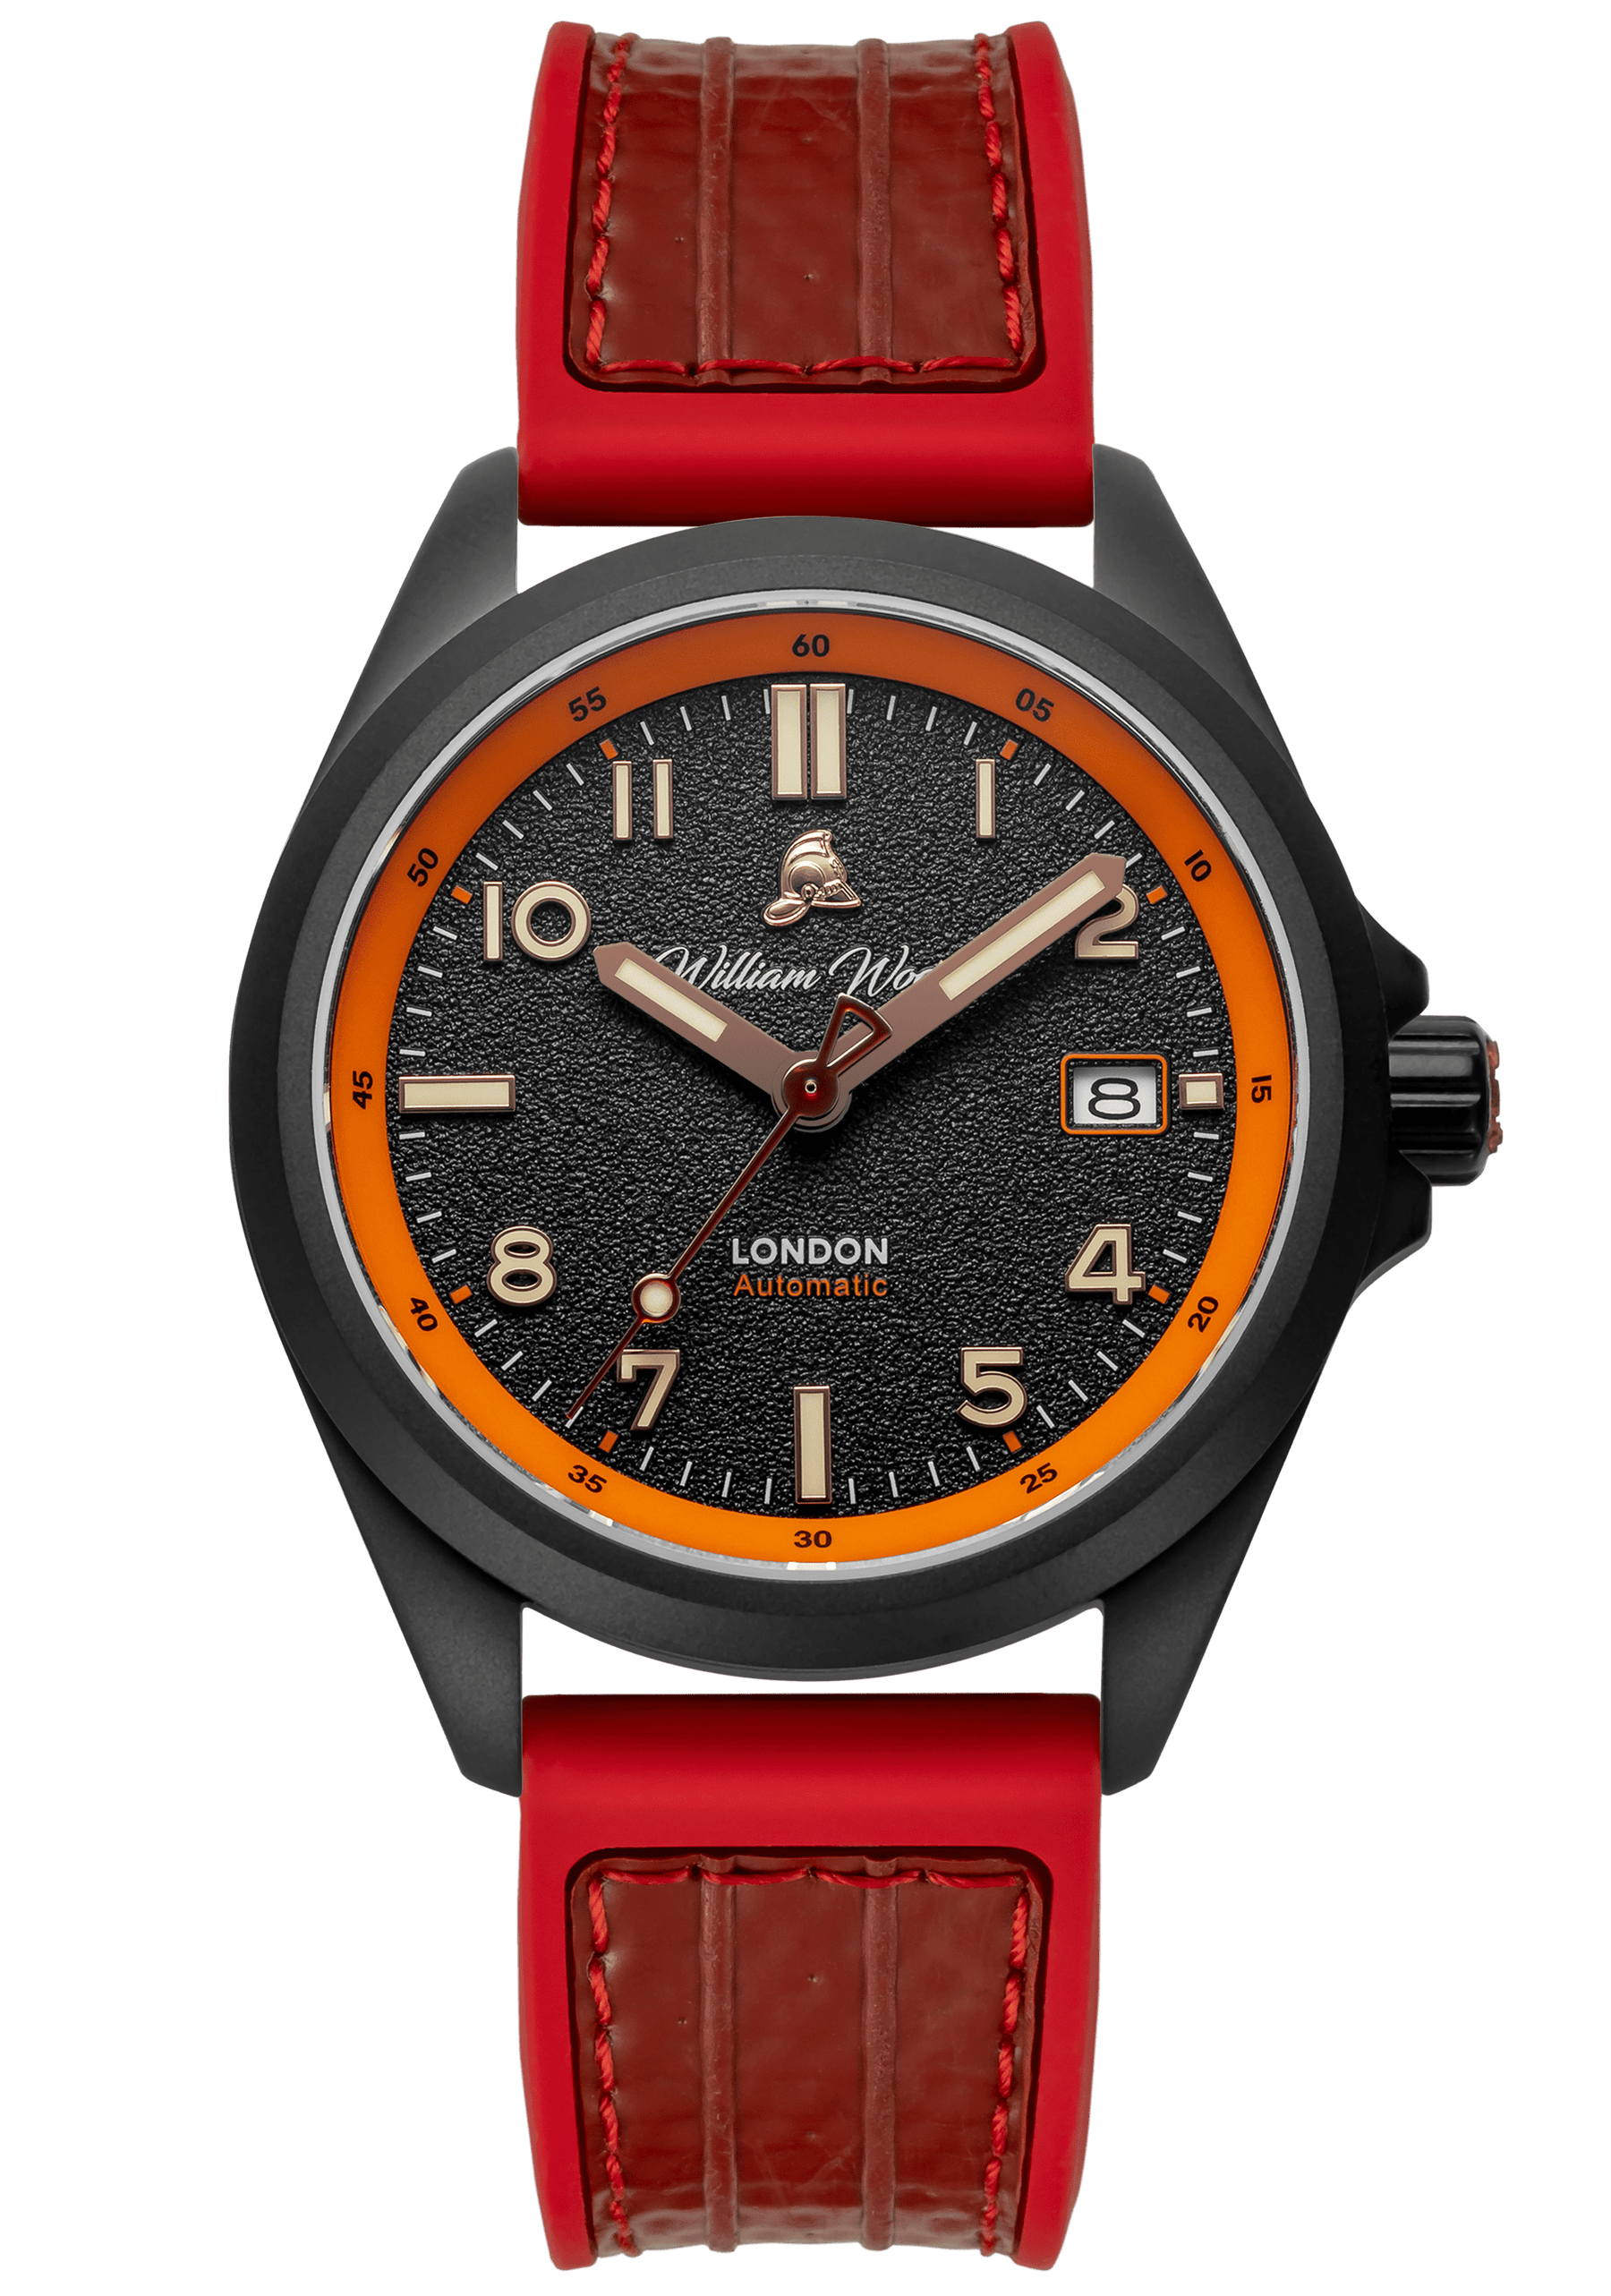 The Fearless Orange Watch